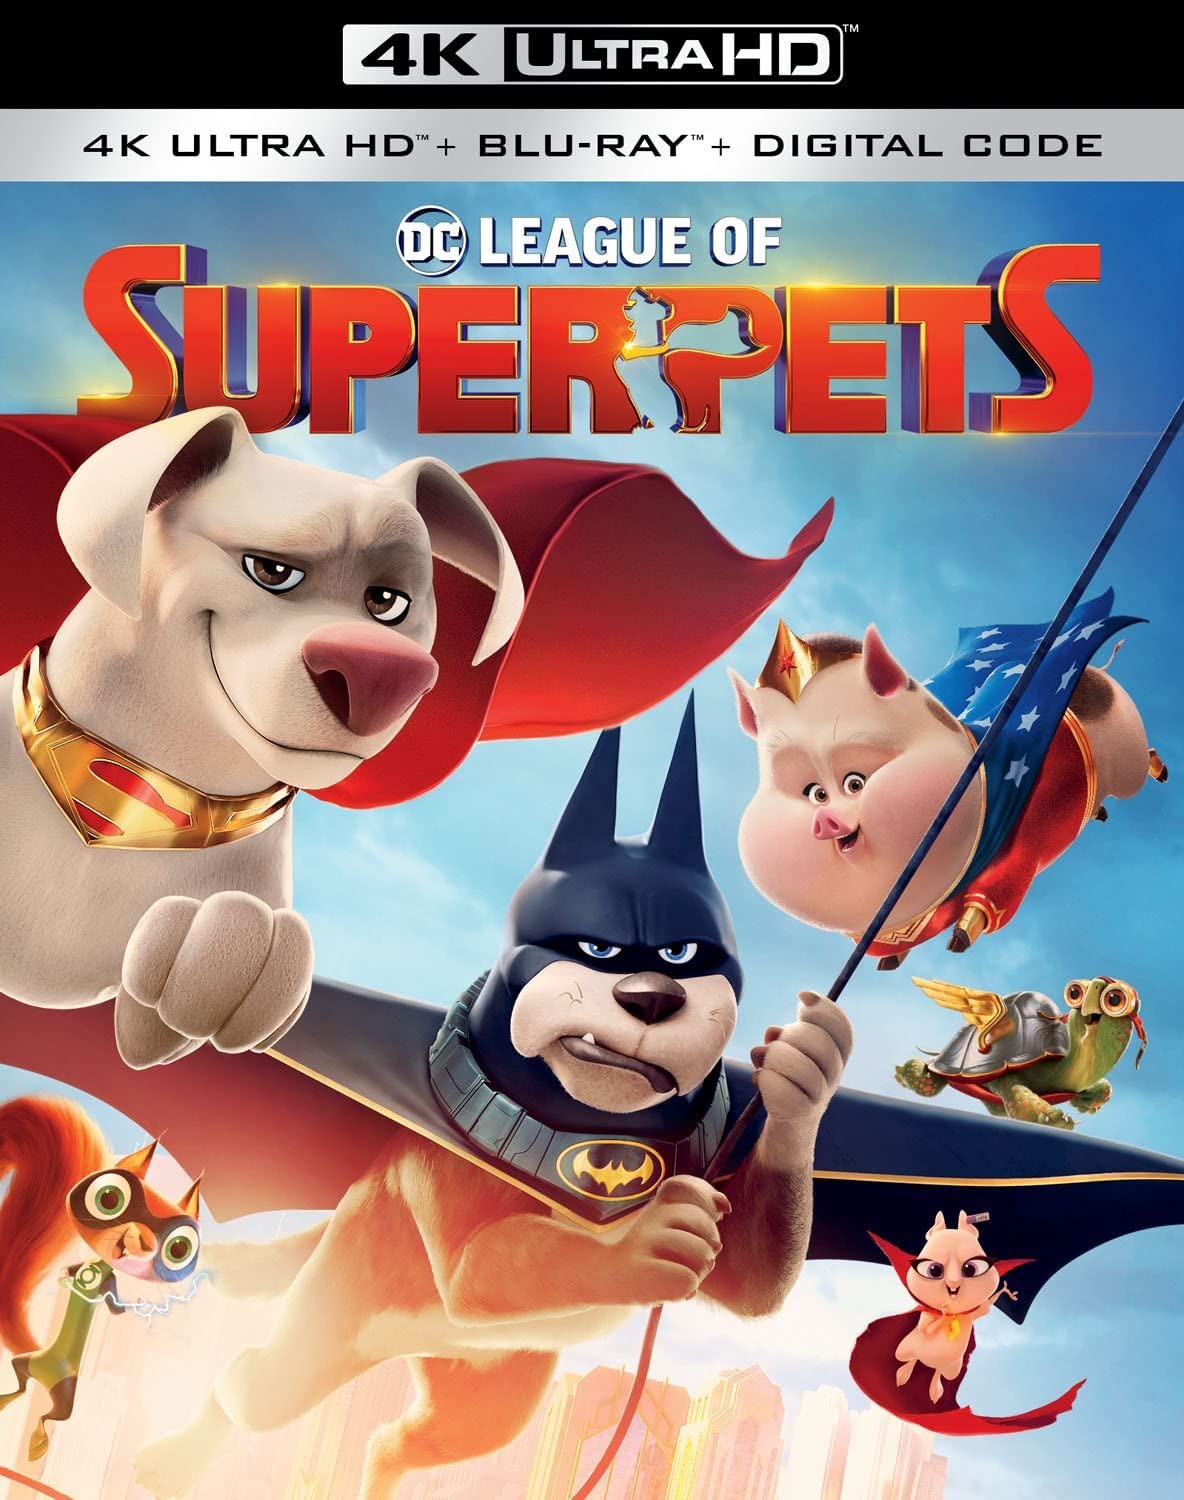 DC League of Super-Pets DVD Release Date October 4, 2022